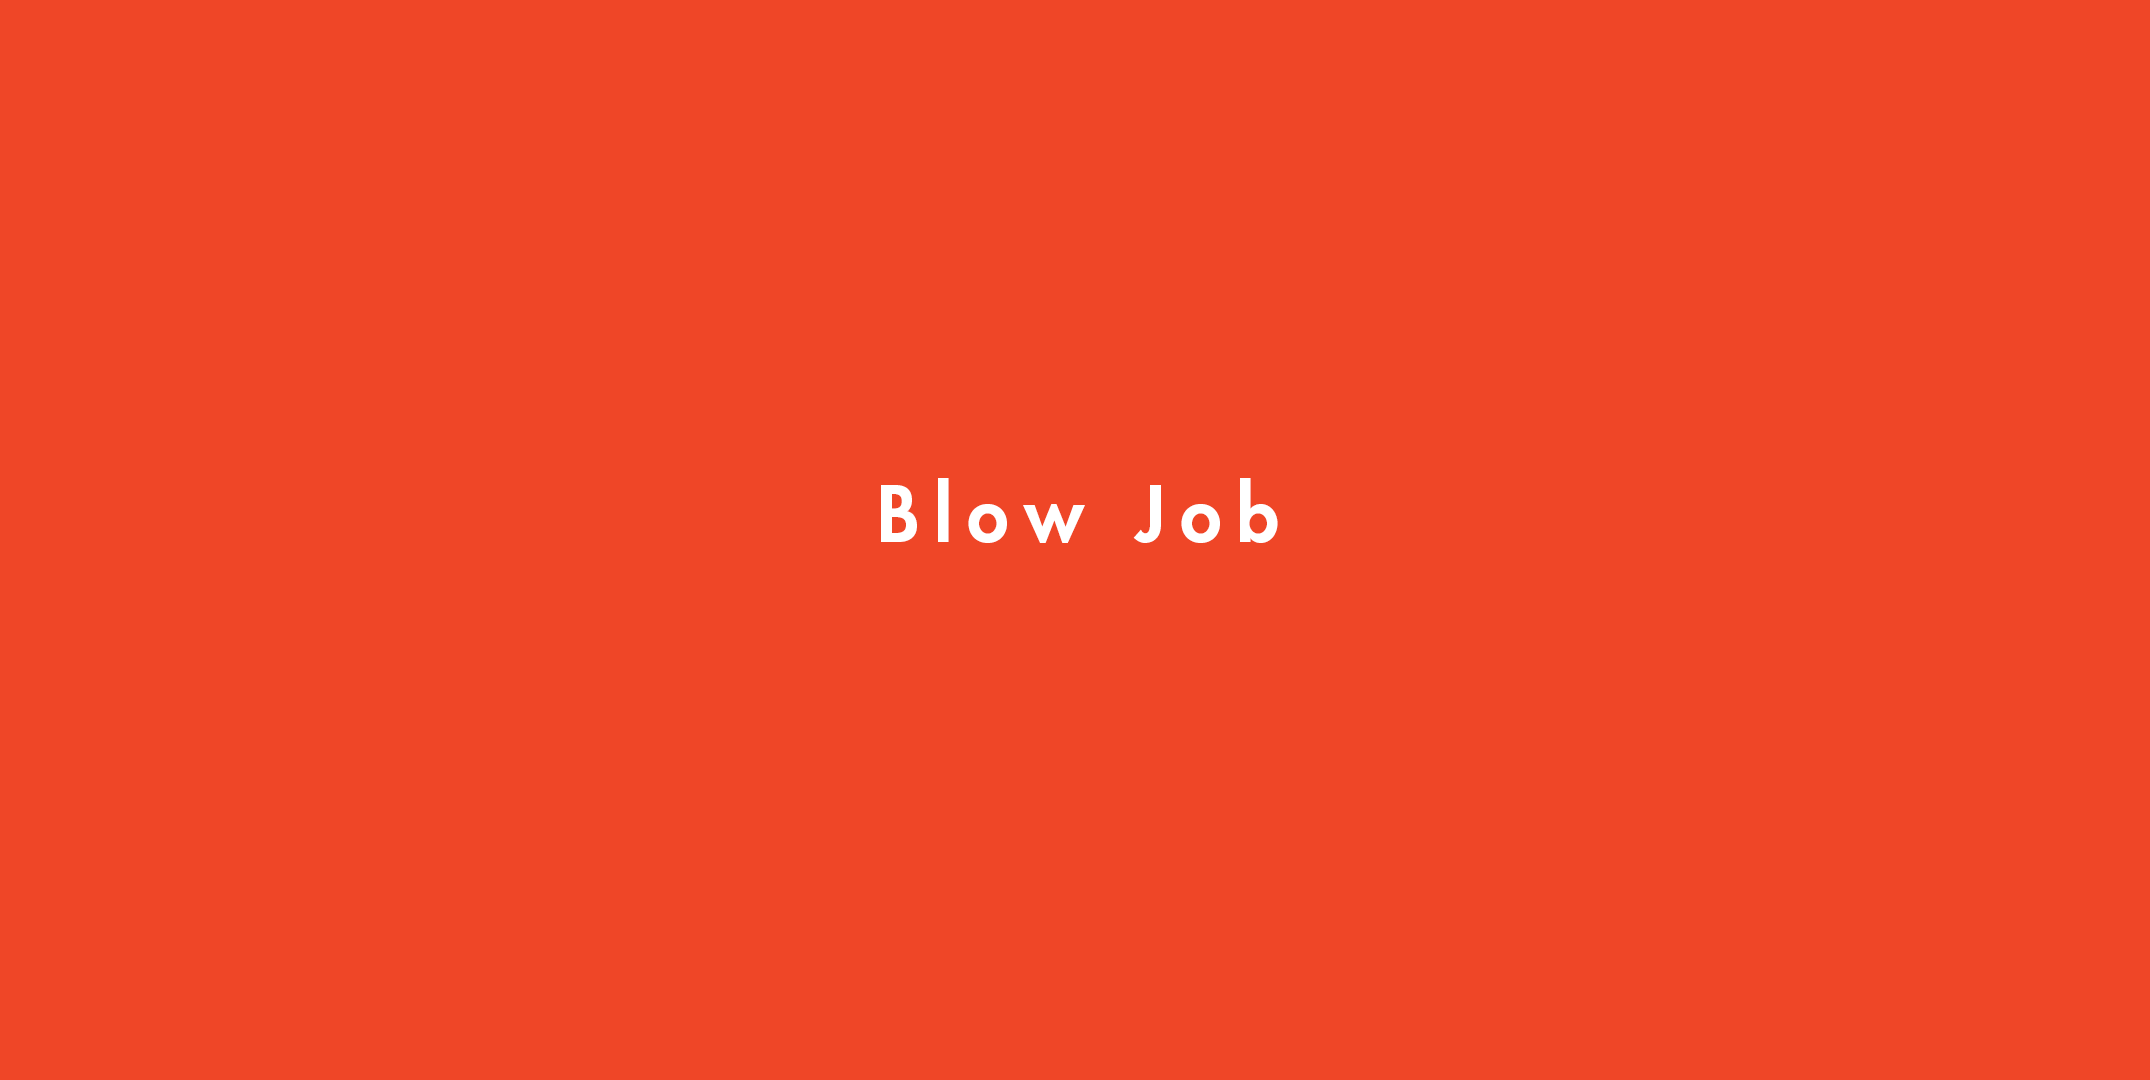 Blow Job Definition image